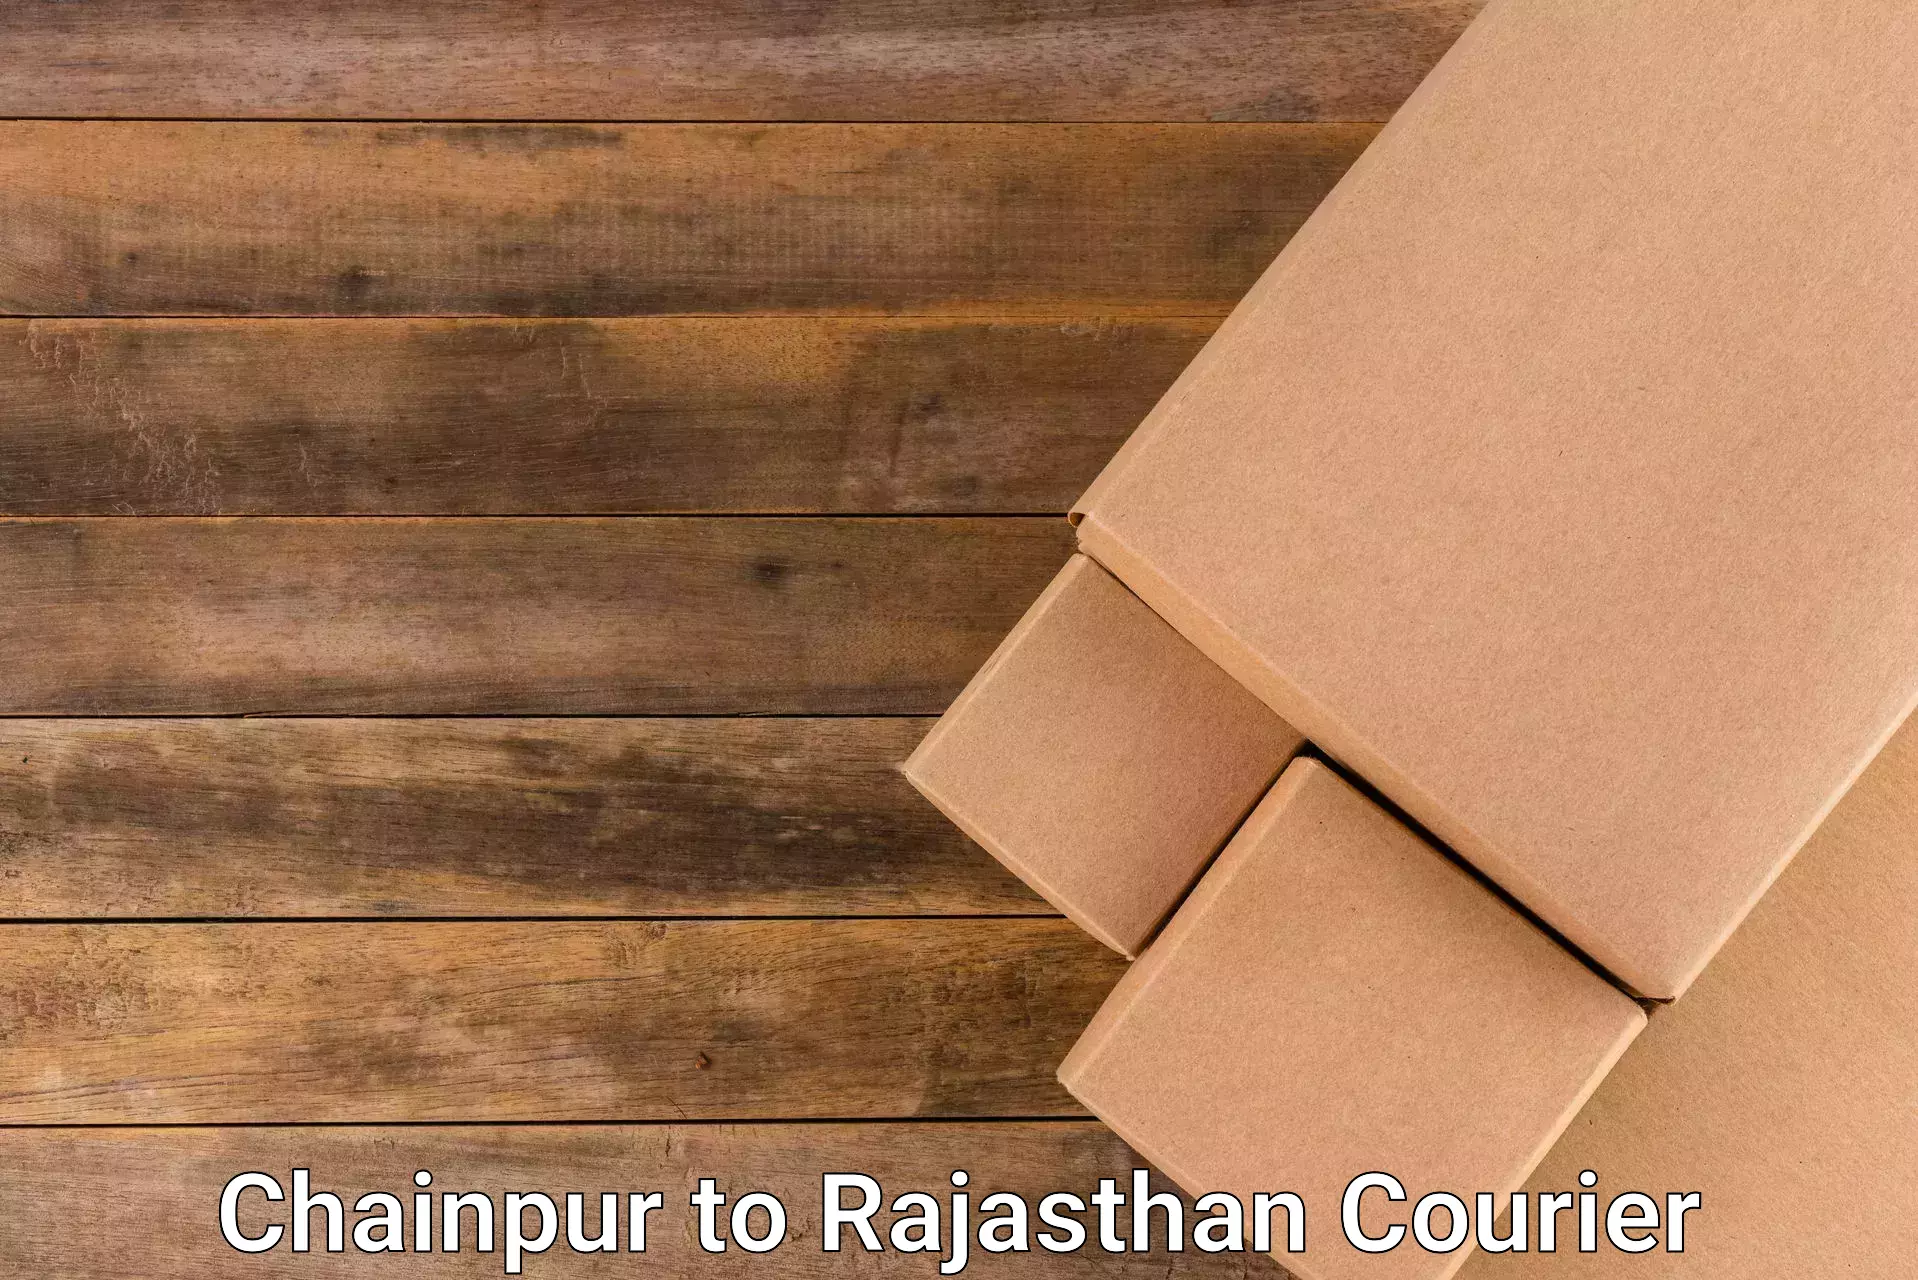 Courier service comparison Chainpur to Khairthal